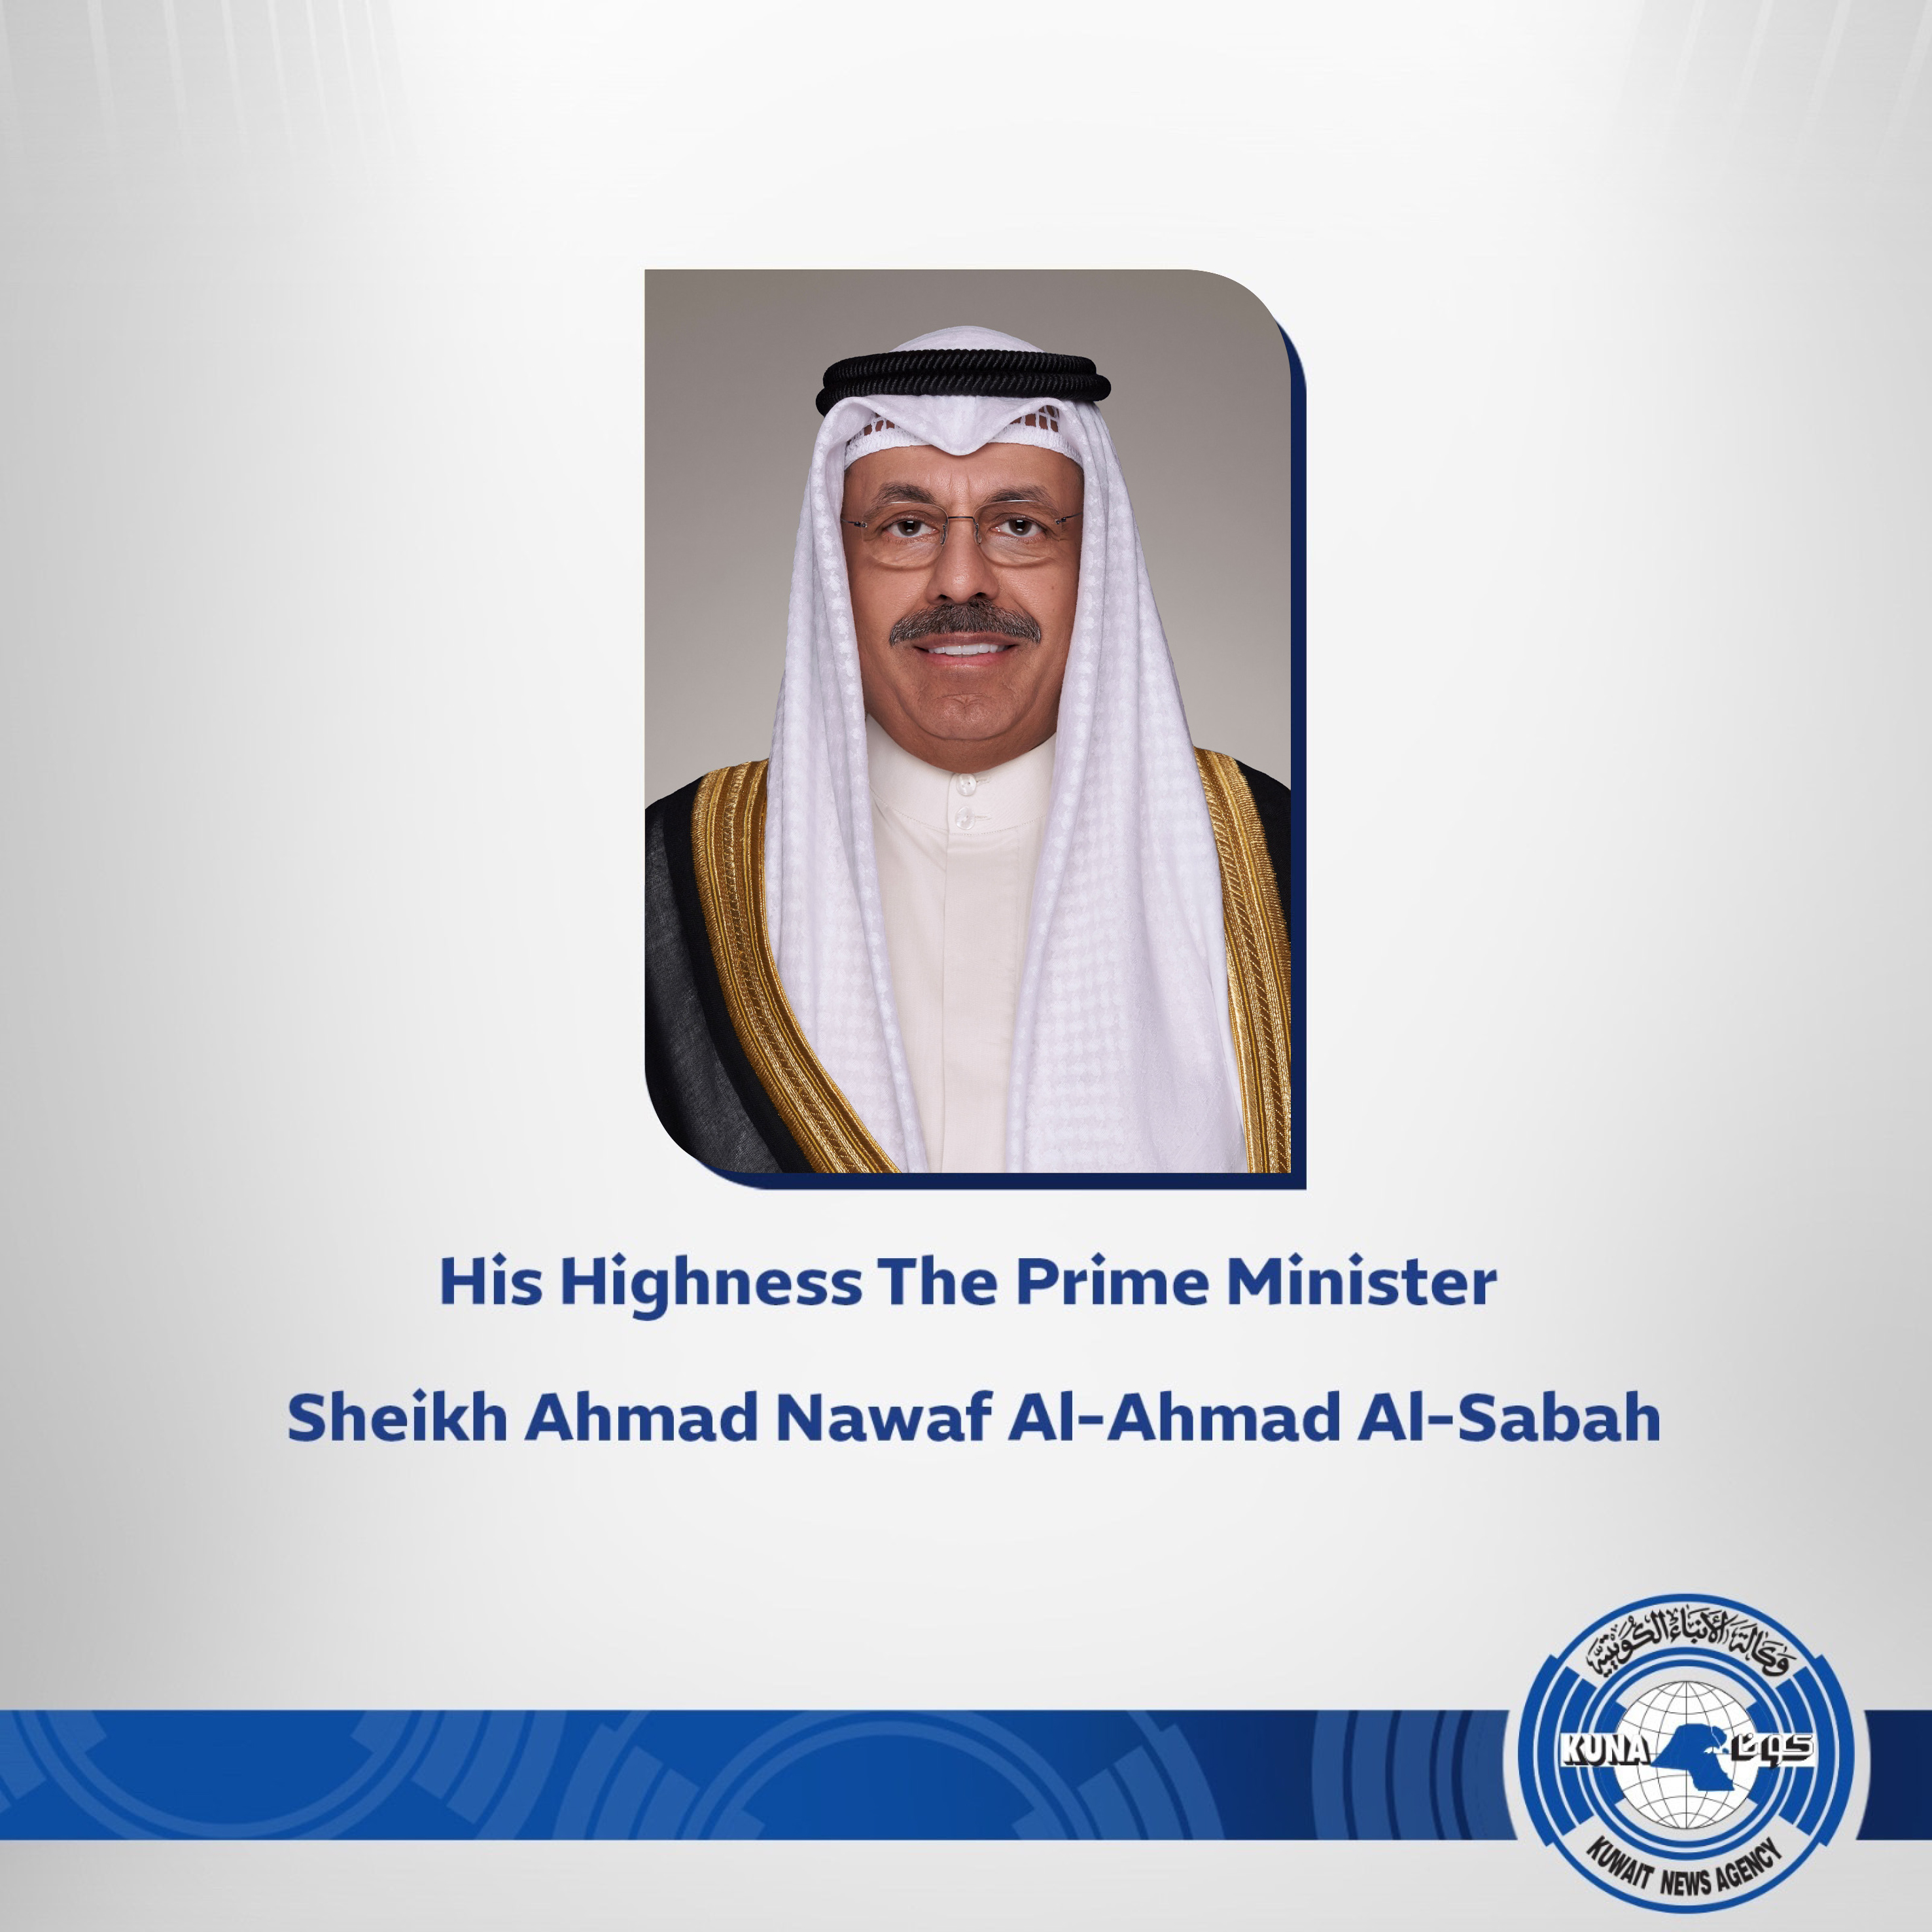 Kuwait Prime Minister congratulates Saudi Arabia on World Expo '30 bid                                                                                                                                                                                    